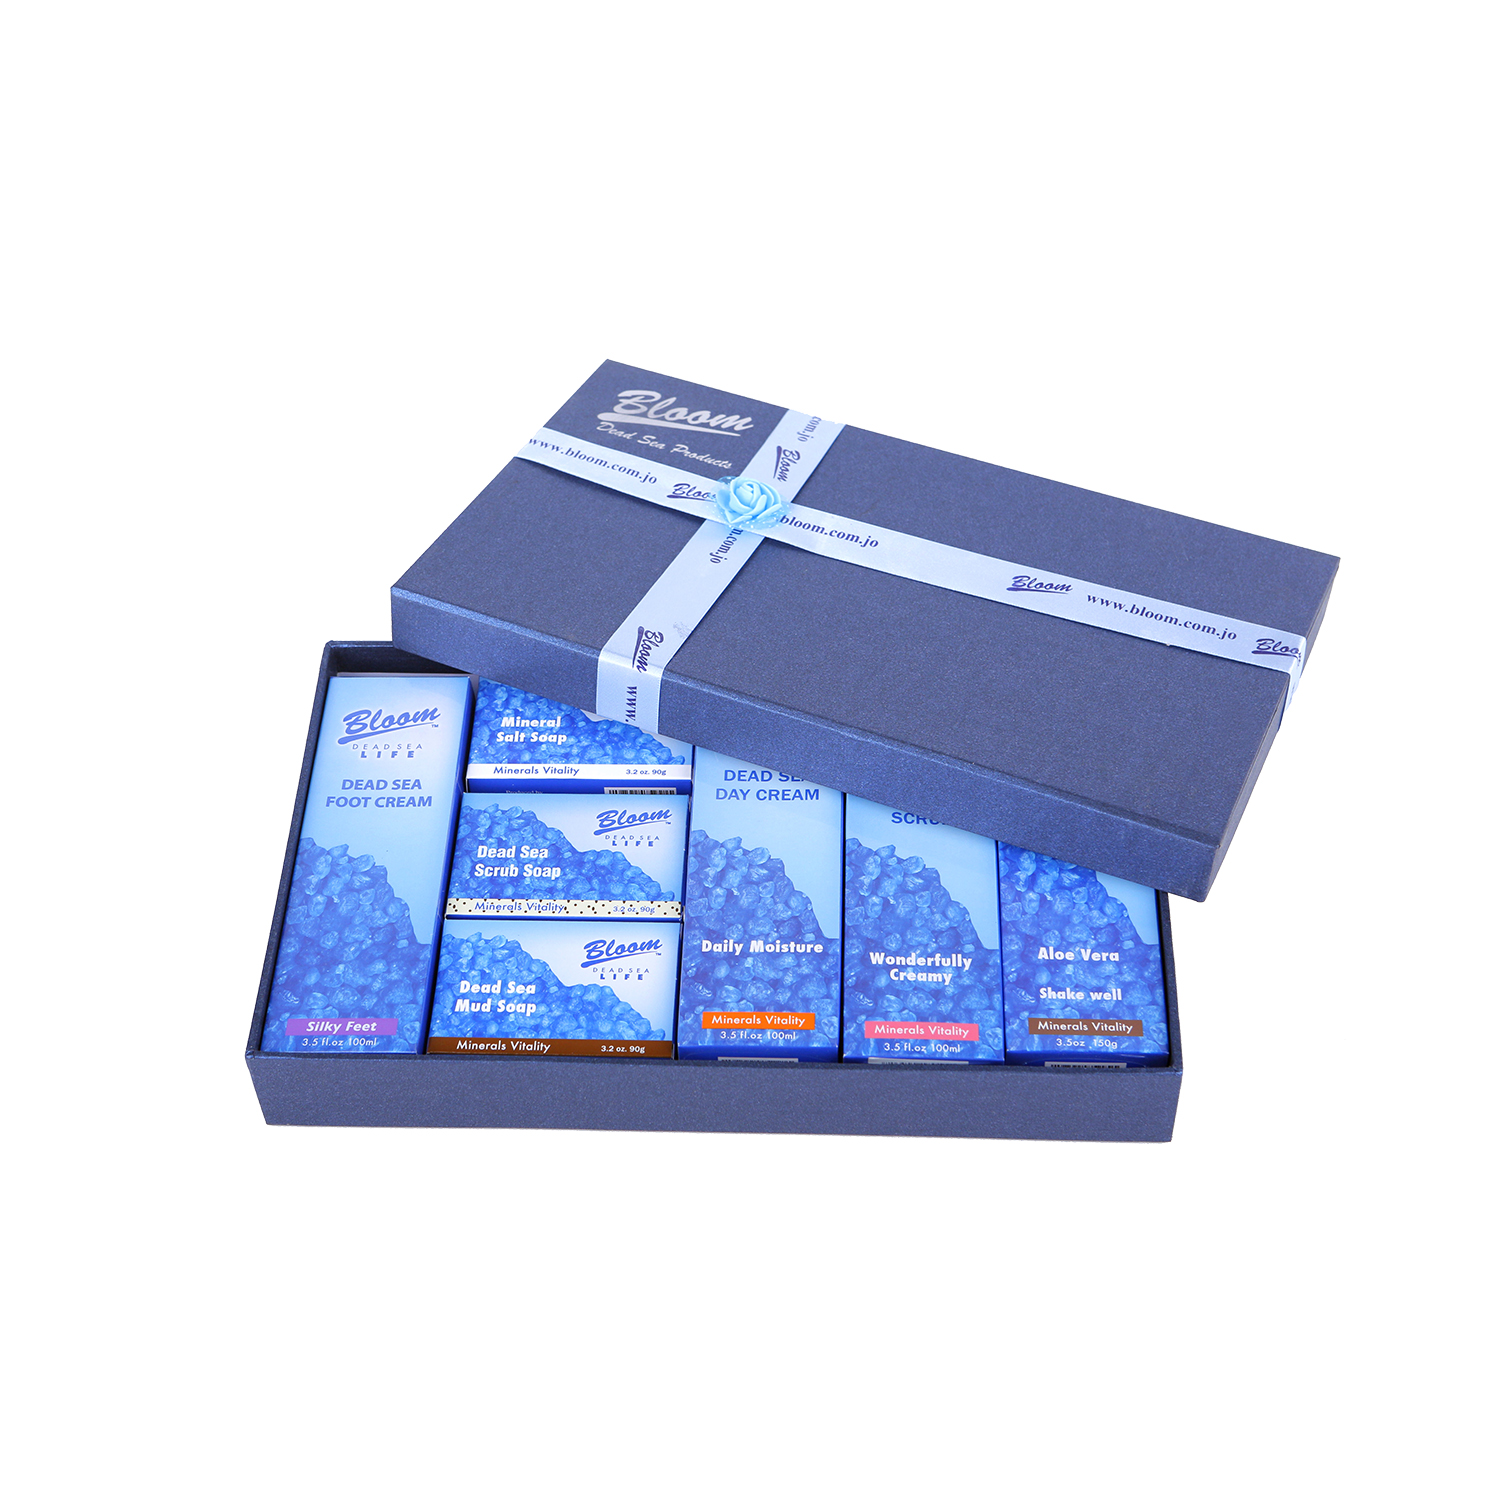 Dead Sea Carton Gift Box